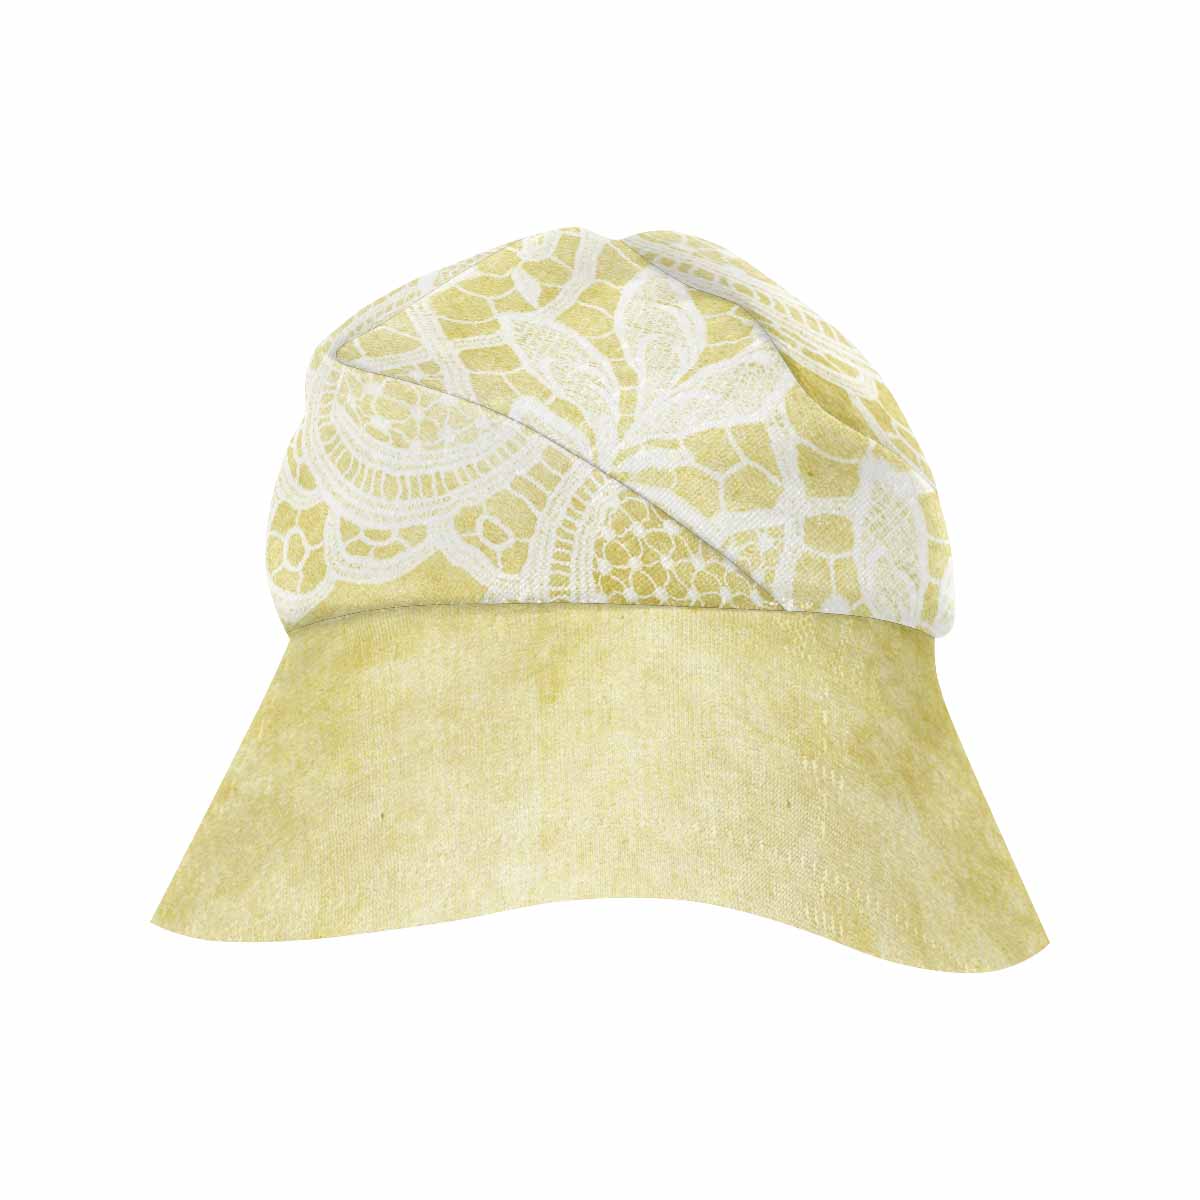 Victorian lace print, wide brim sunvisor Hat, outdoors hat, design 44